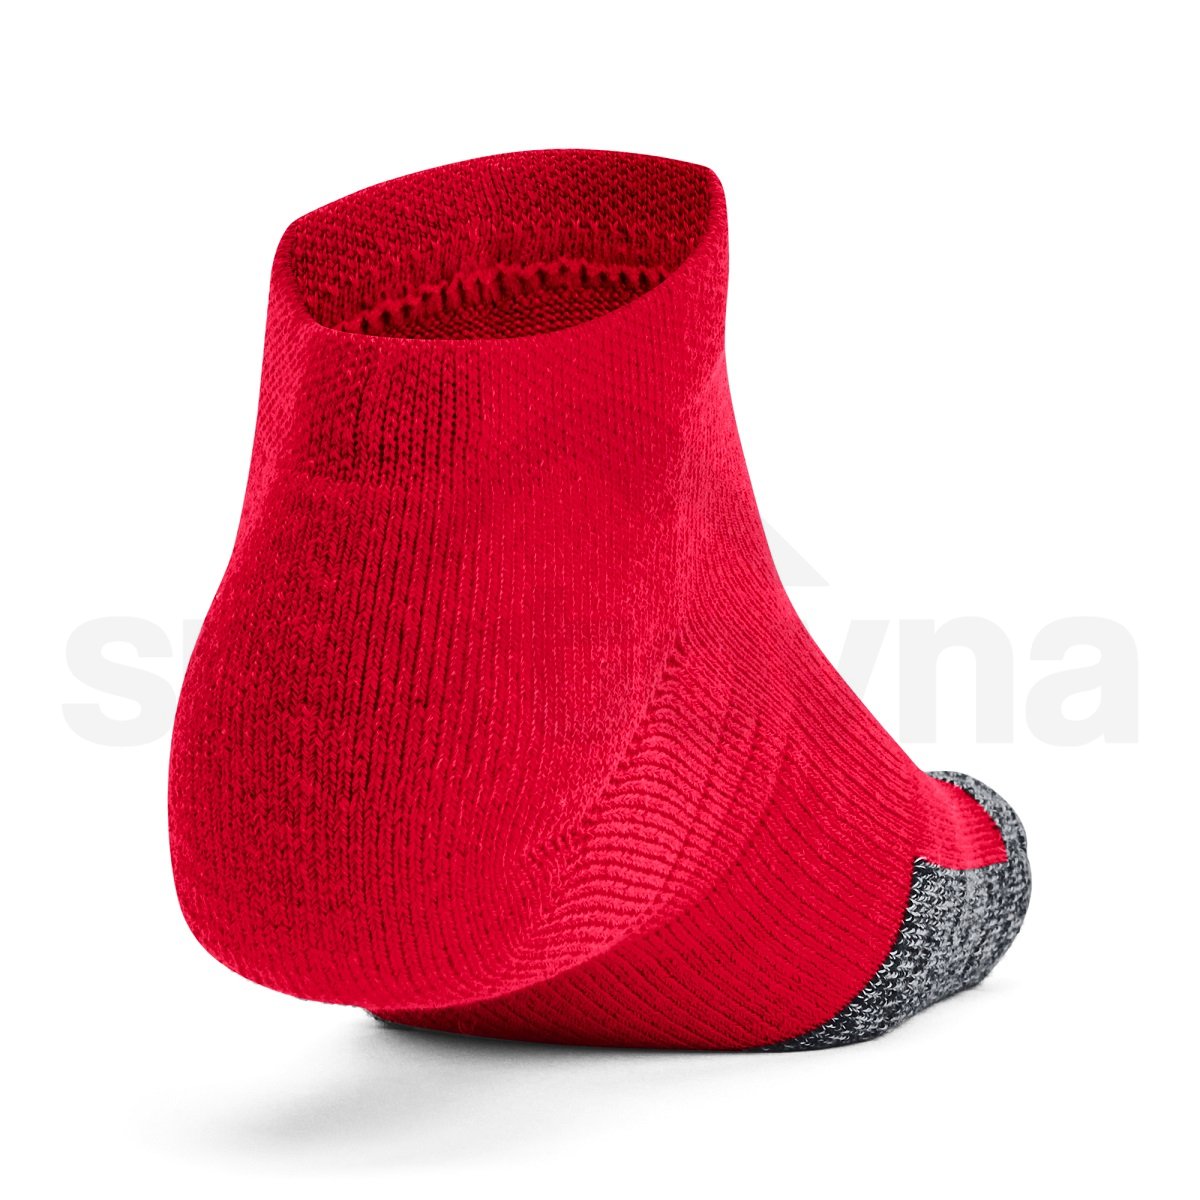 Ponožky Under Armour Heatgear Low Cut 3Pk - červená/šedá/černá